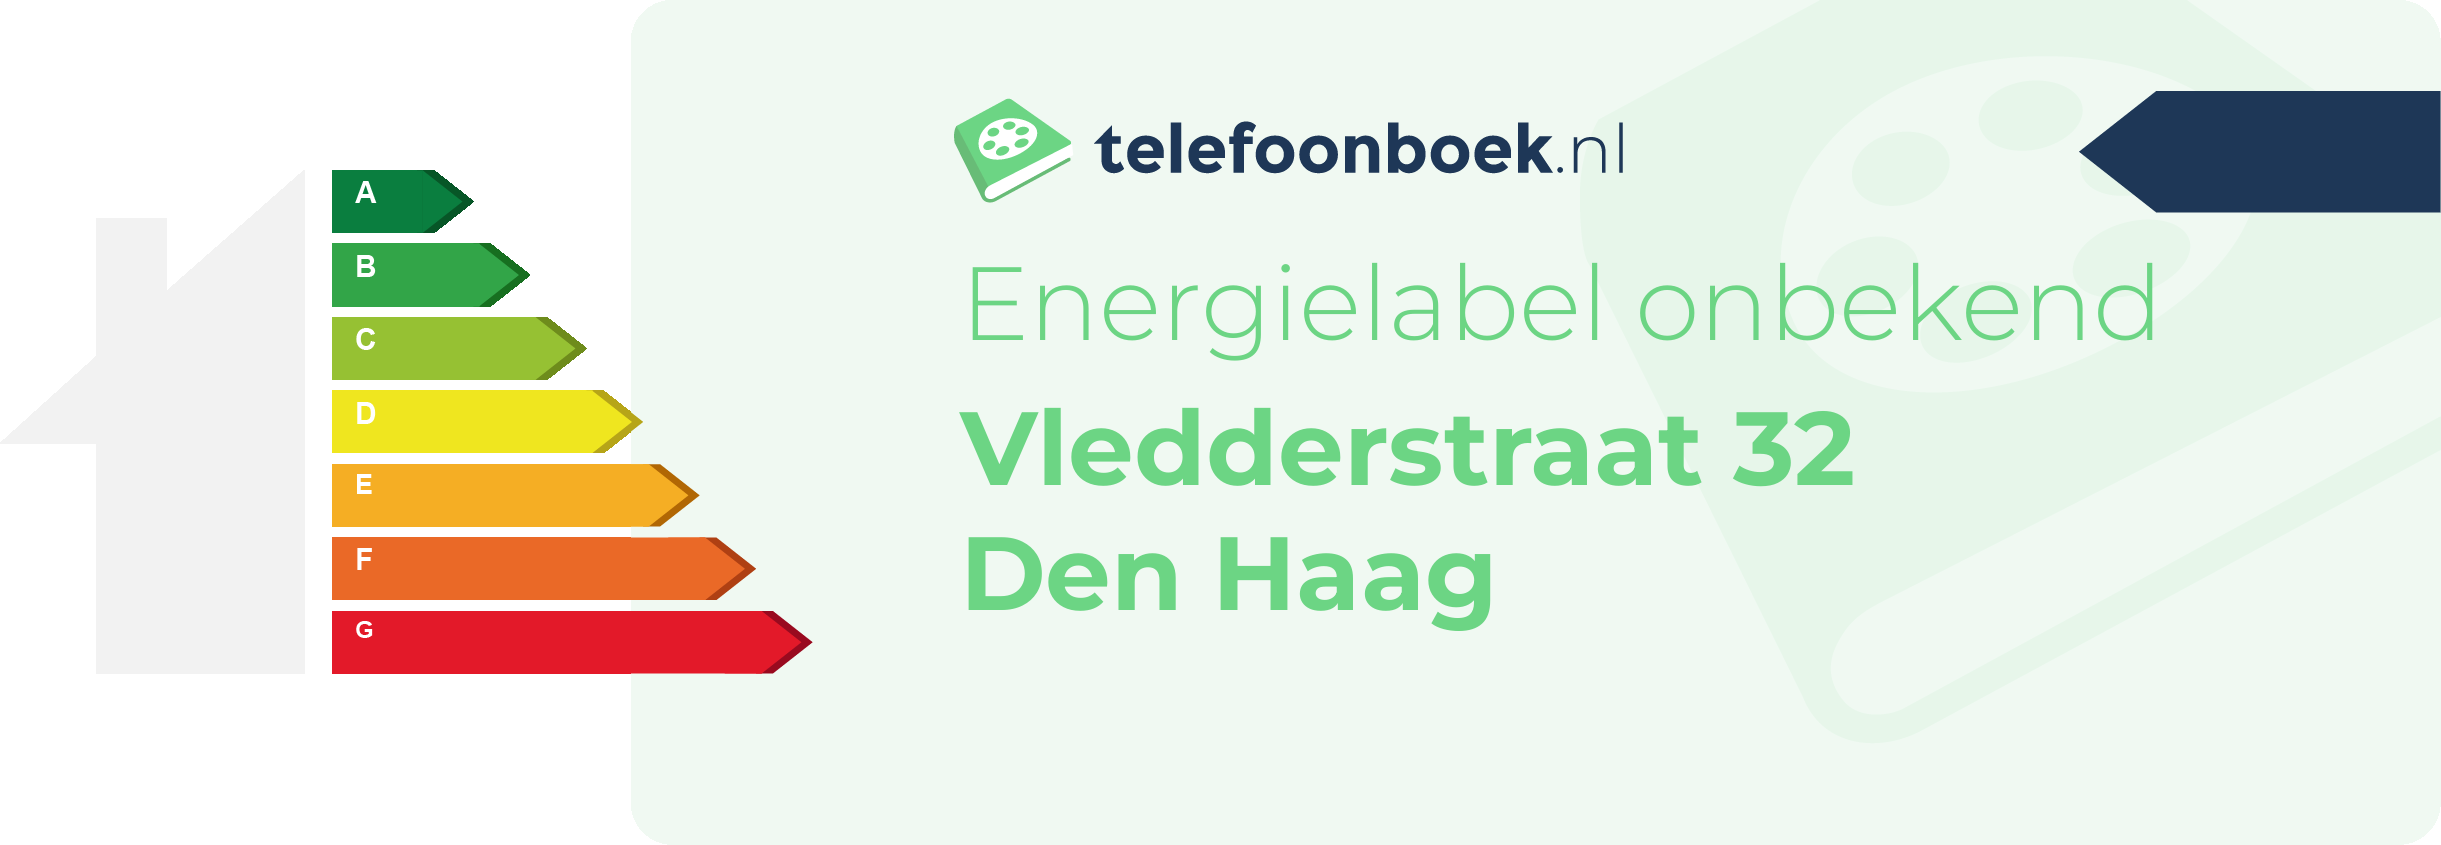 Energielabel Vledderstraat 32 Den Haag